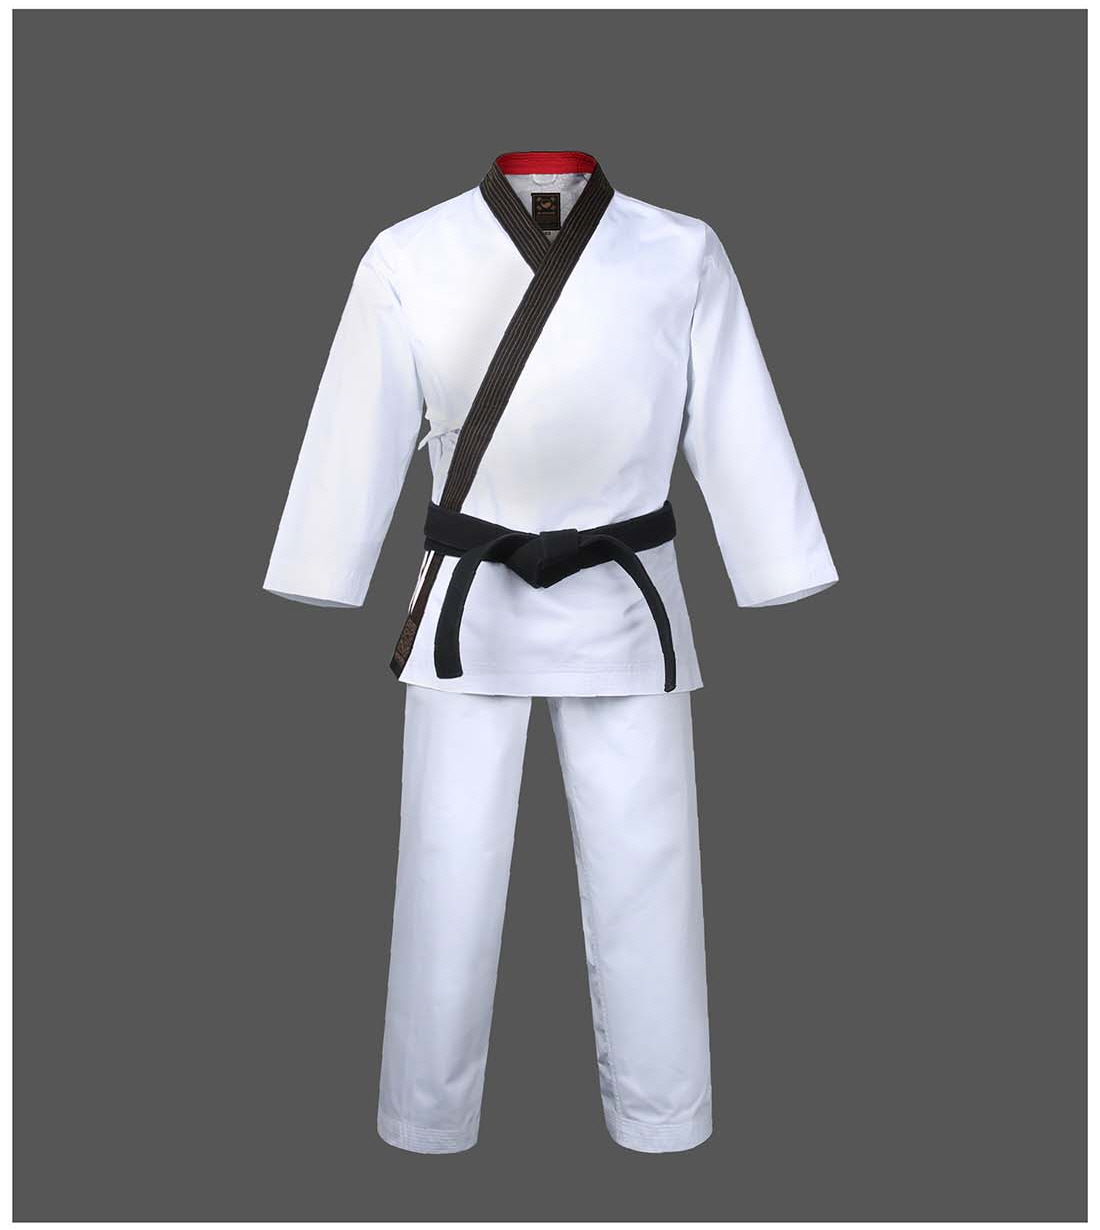 Mooto Taekwondo Extera 6 Uniform White Color BK-V NECK Light Type for Fighter 